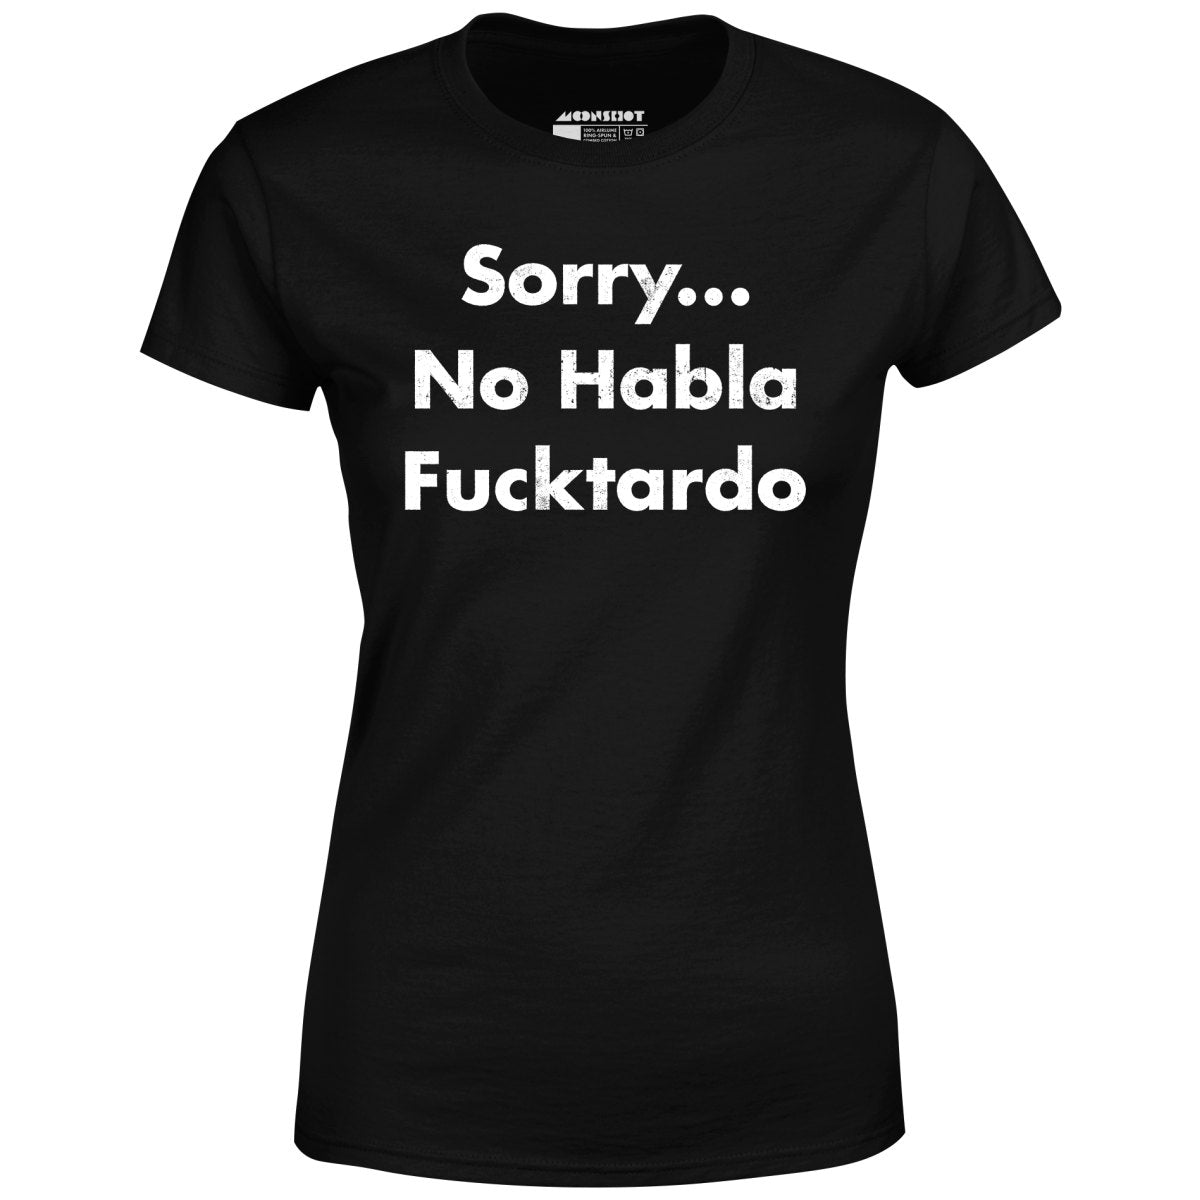 Sorry... No Habla Fucktardo - Women's T-Shirt